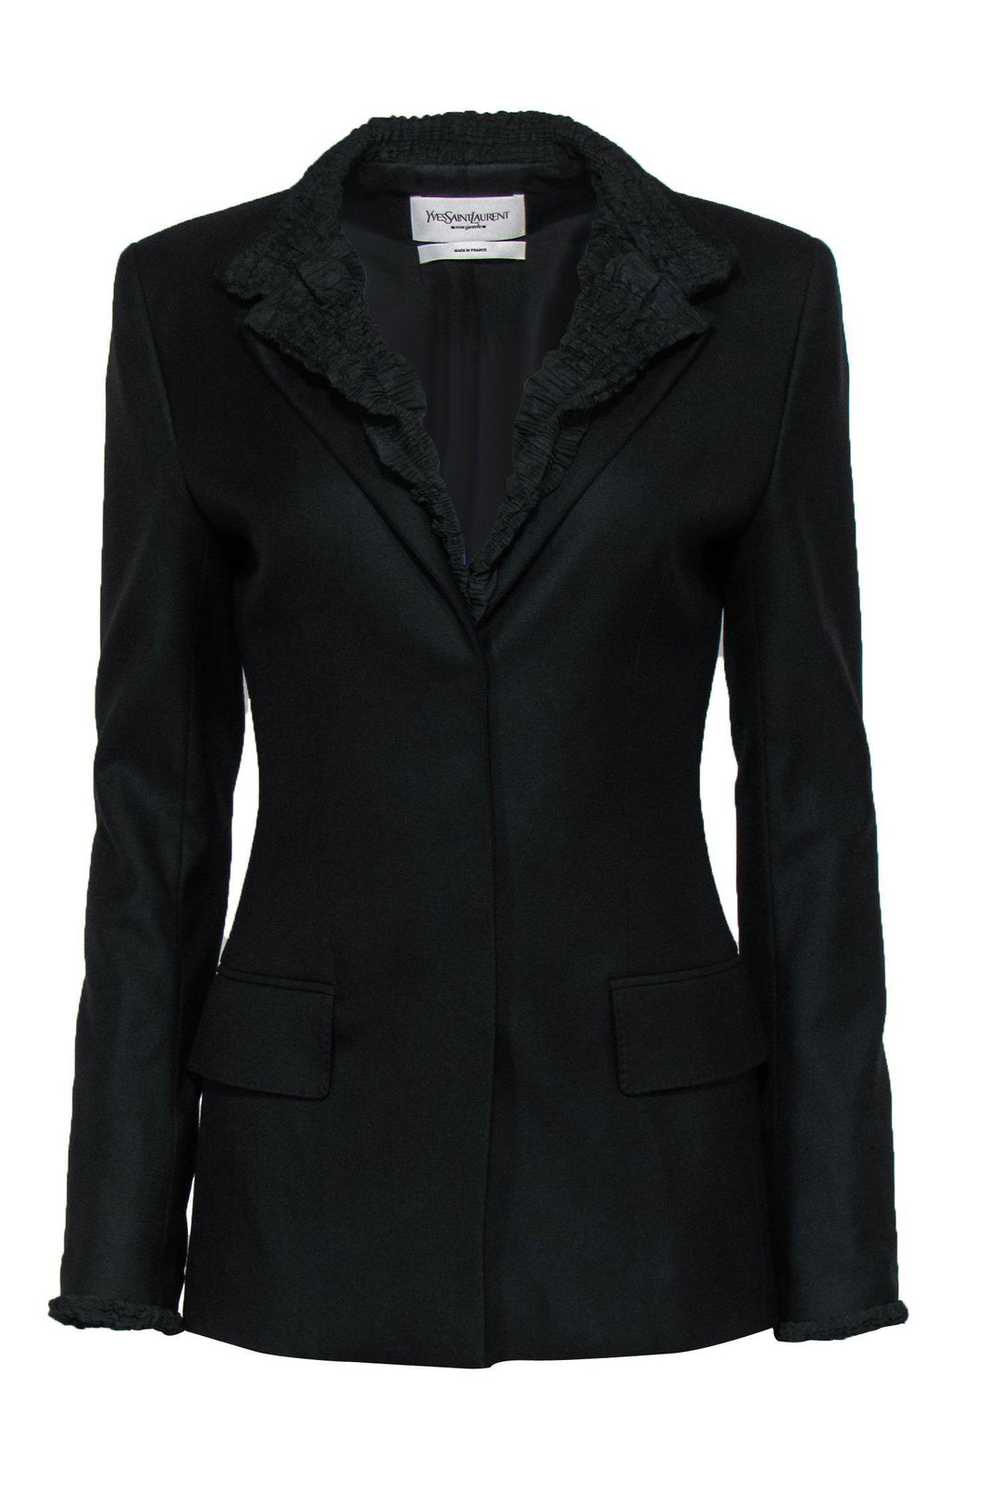 Yves Saint Laurent - Black Crinkled Ruched Wool J… - image 1